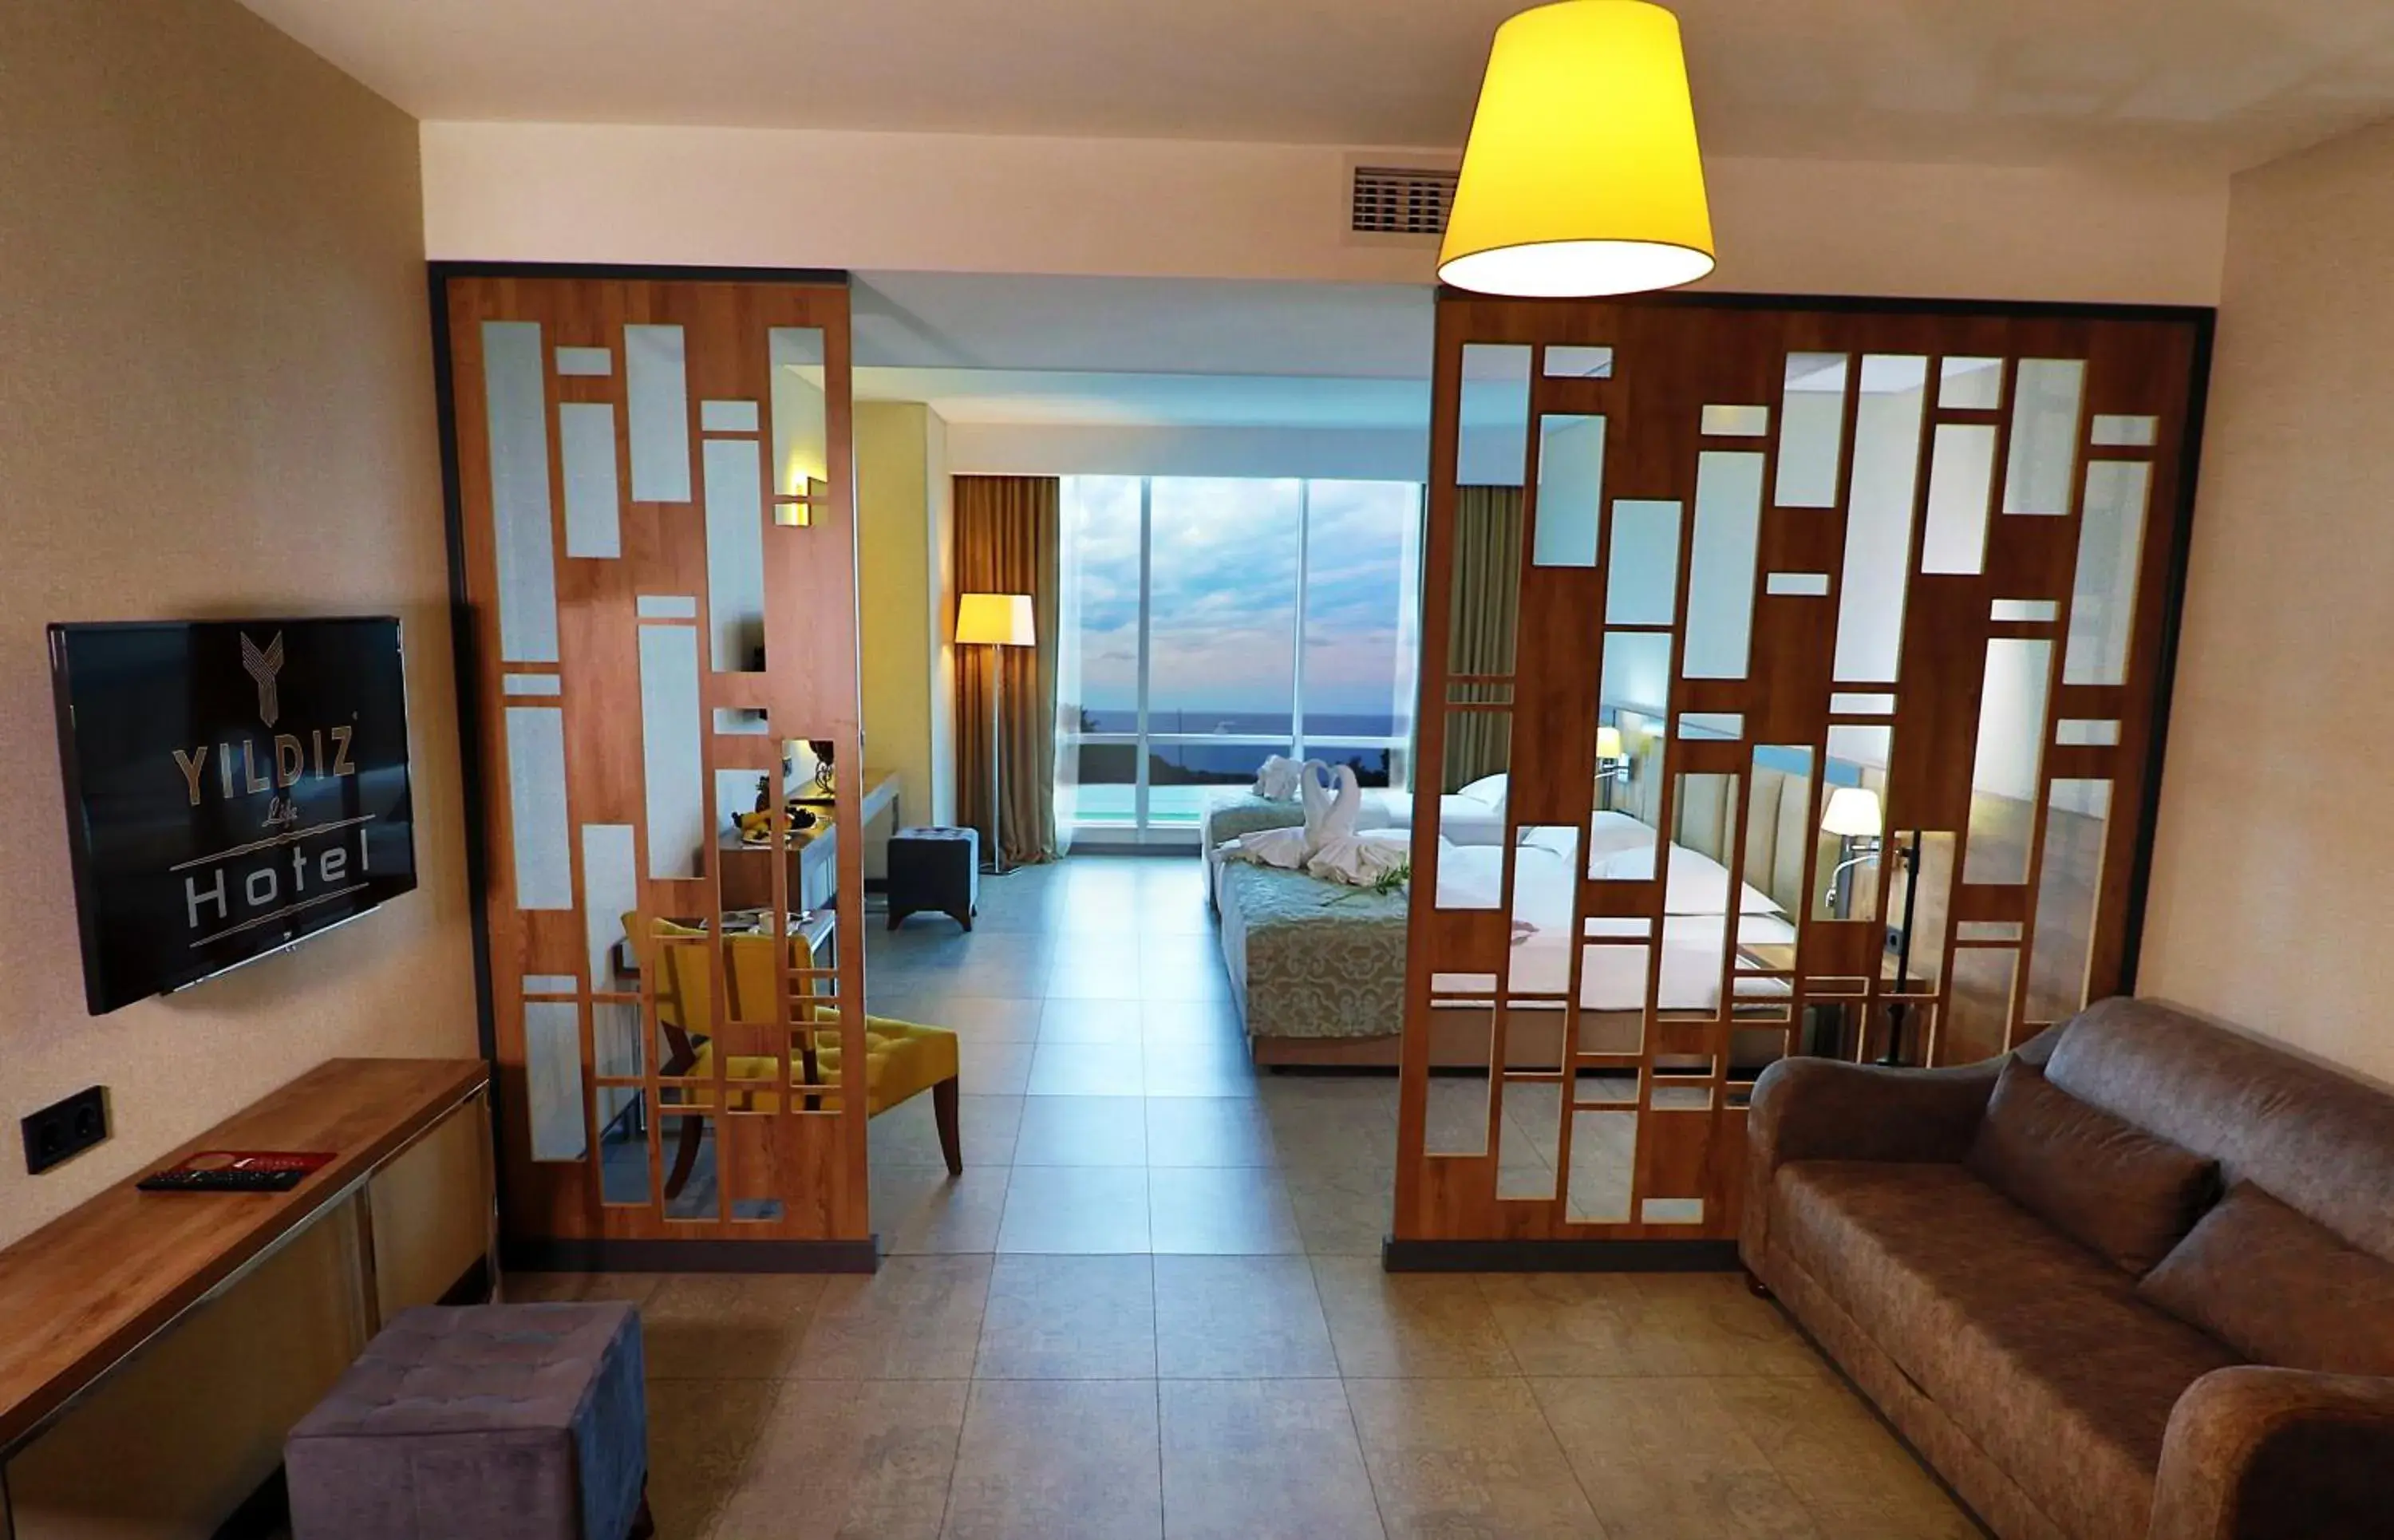 Seating Area in Yildiz Life Hotel